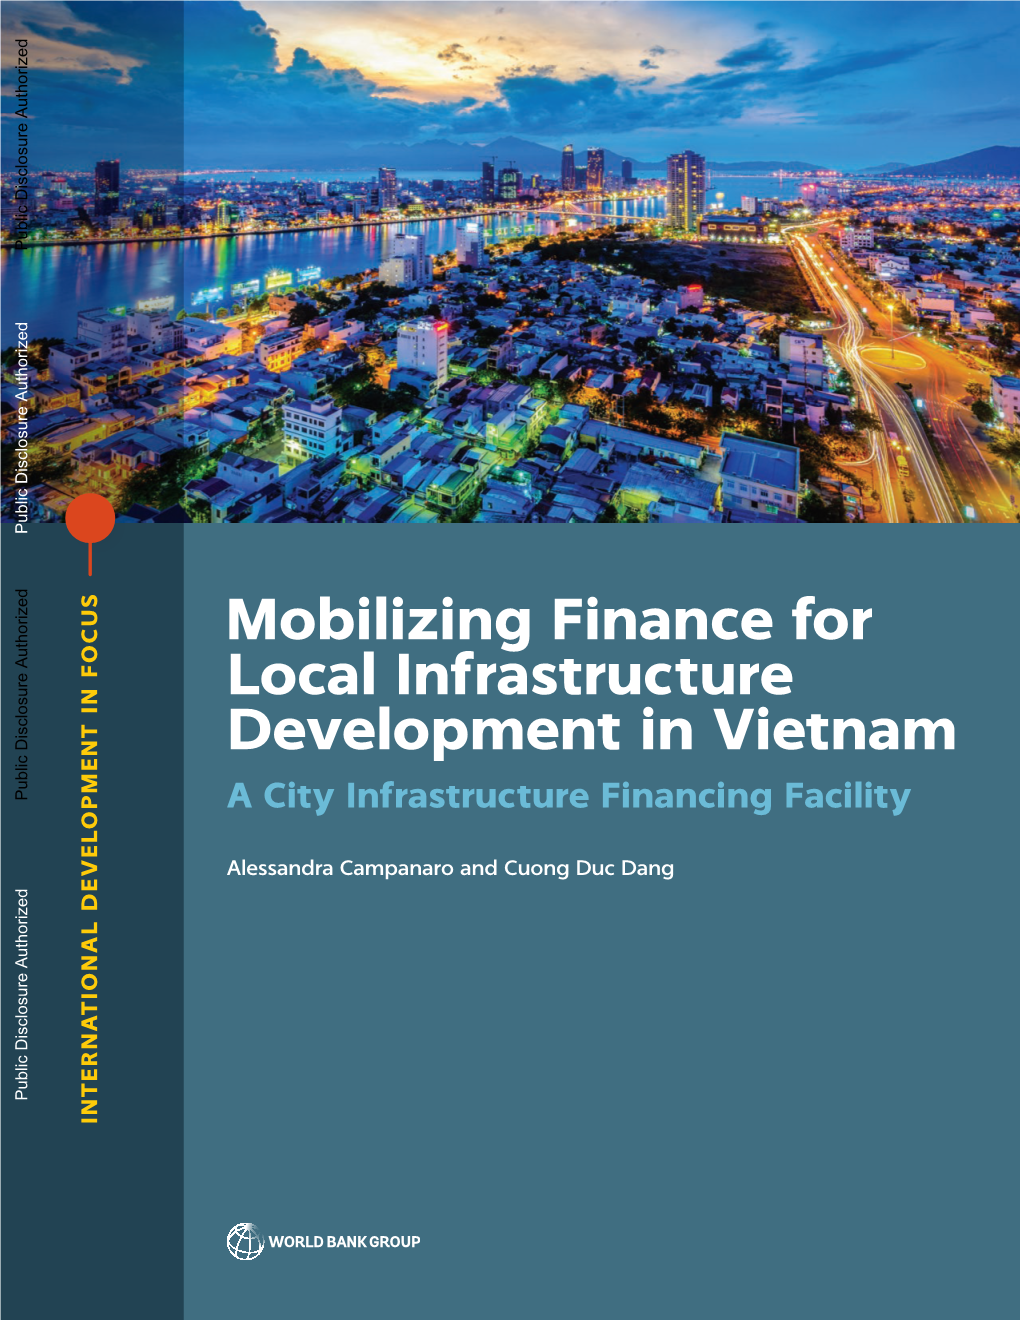 3.1 Vietnam Banking Reform Timeline